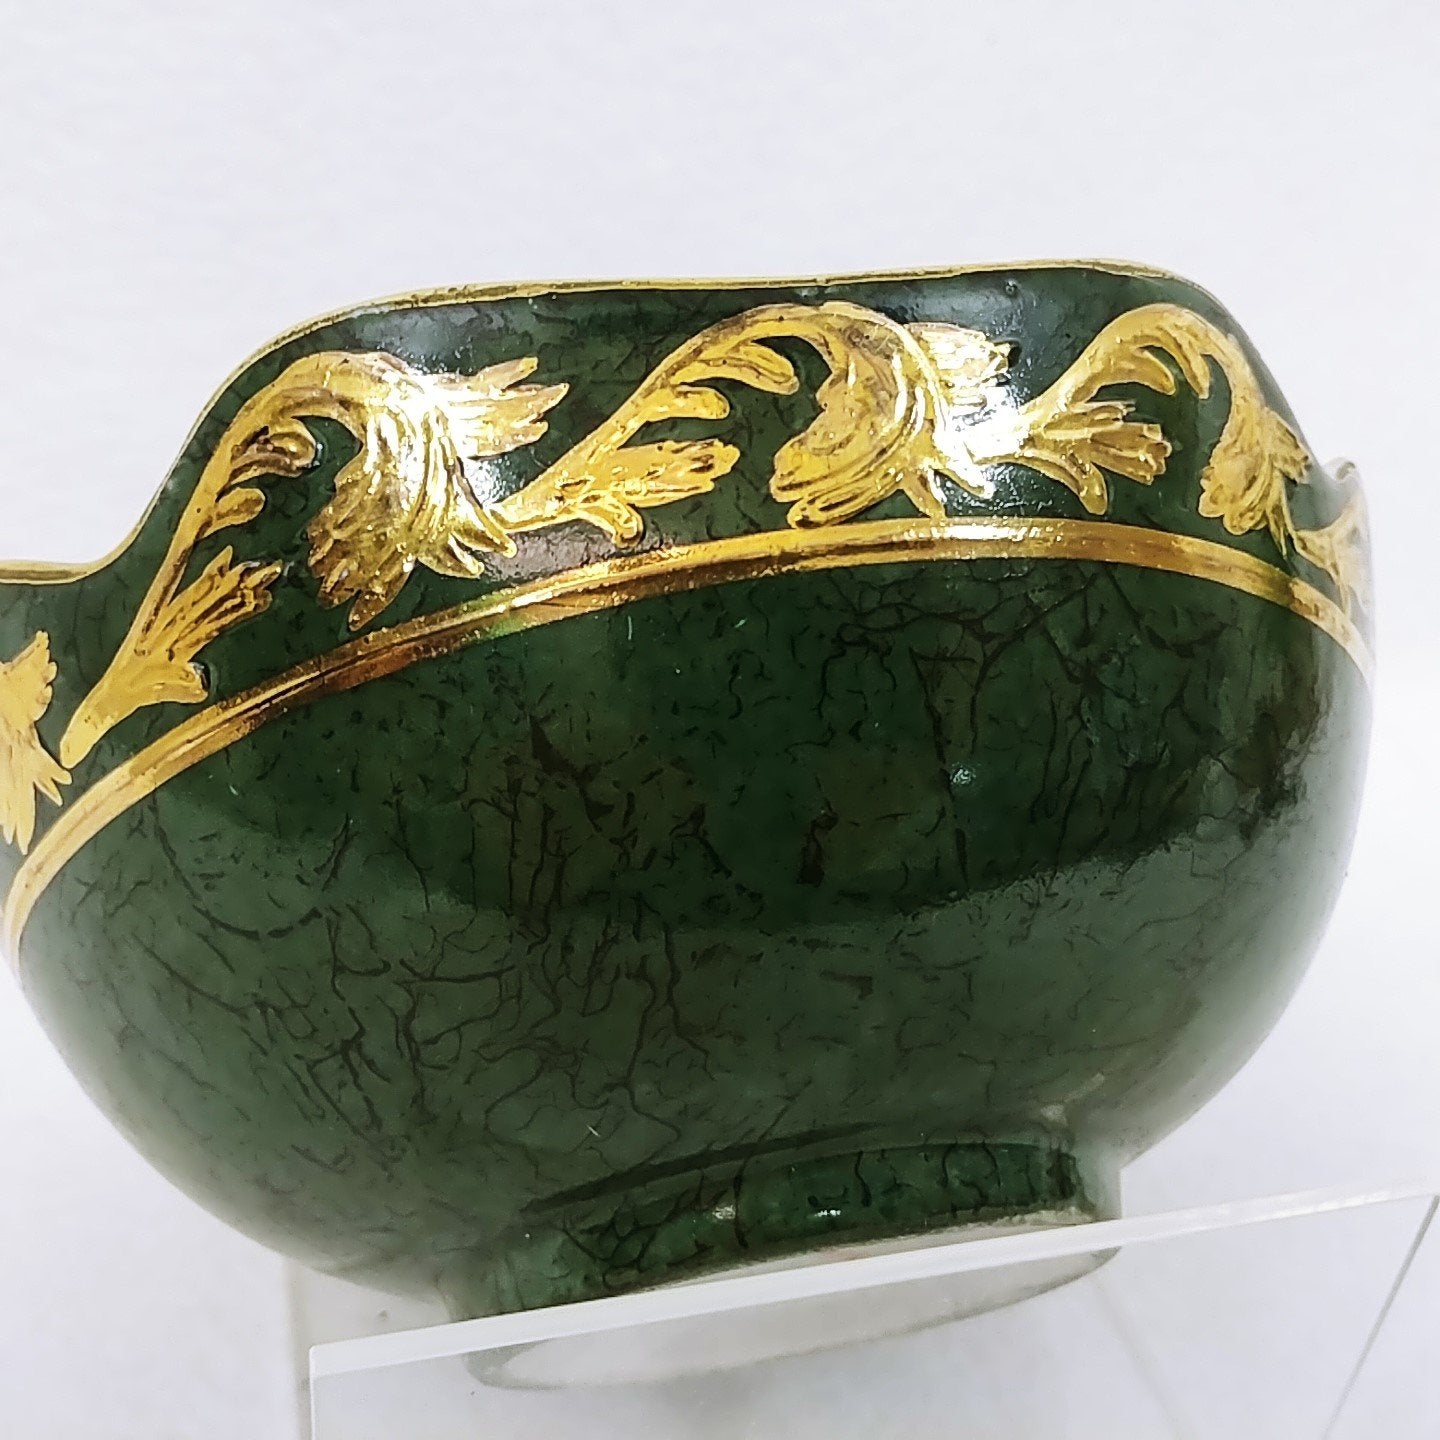 Bowl Scalloped Rim Gold Embossed Trim Decorative Bowl Only 6" Vintage Decor